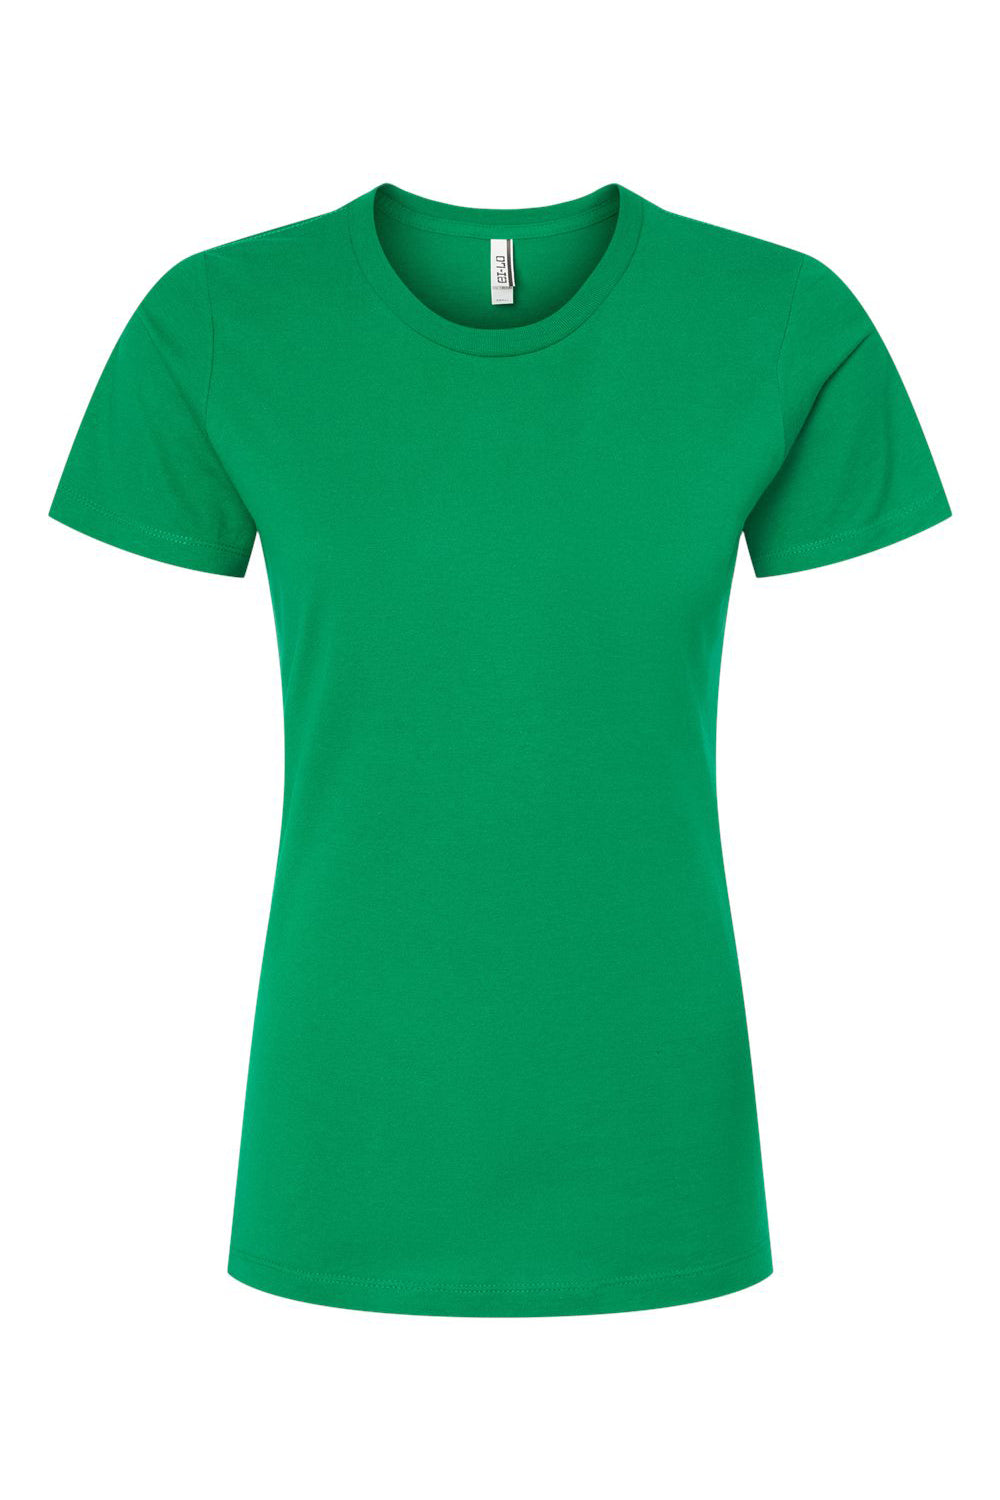 Tultex 516 Womens Premium Short Sleeve Crewneck T-Shirt Kelly Green Flat Front